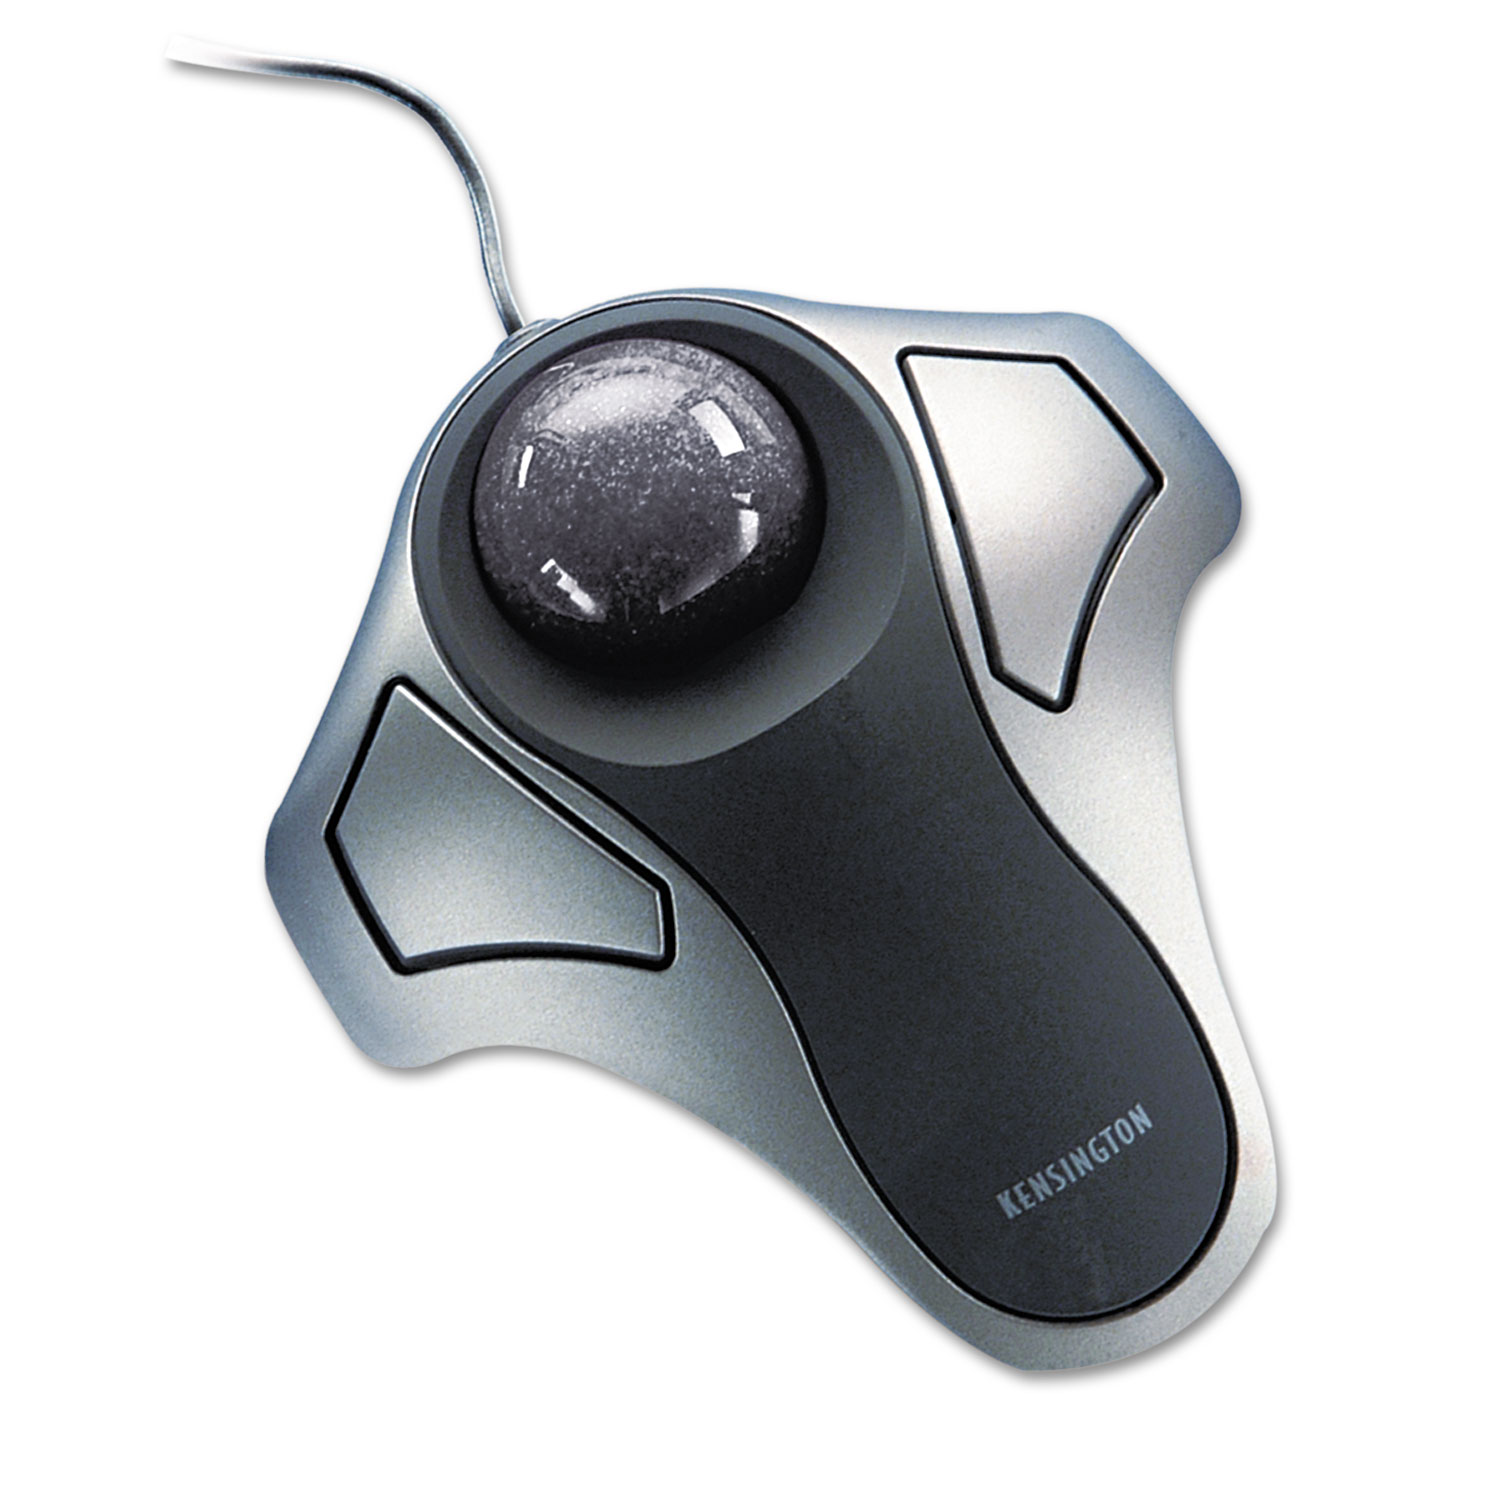  Kensington K64327F Orbit Optical Trackball Mouse, USB 2.0, Left/Right Hand Use, Black/Silver (KMW64327) 